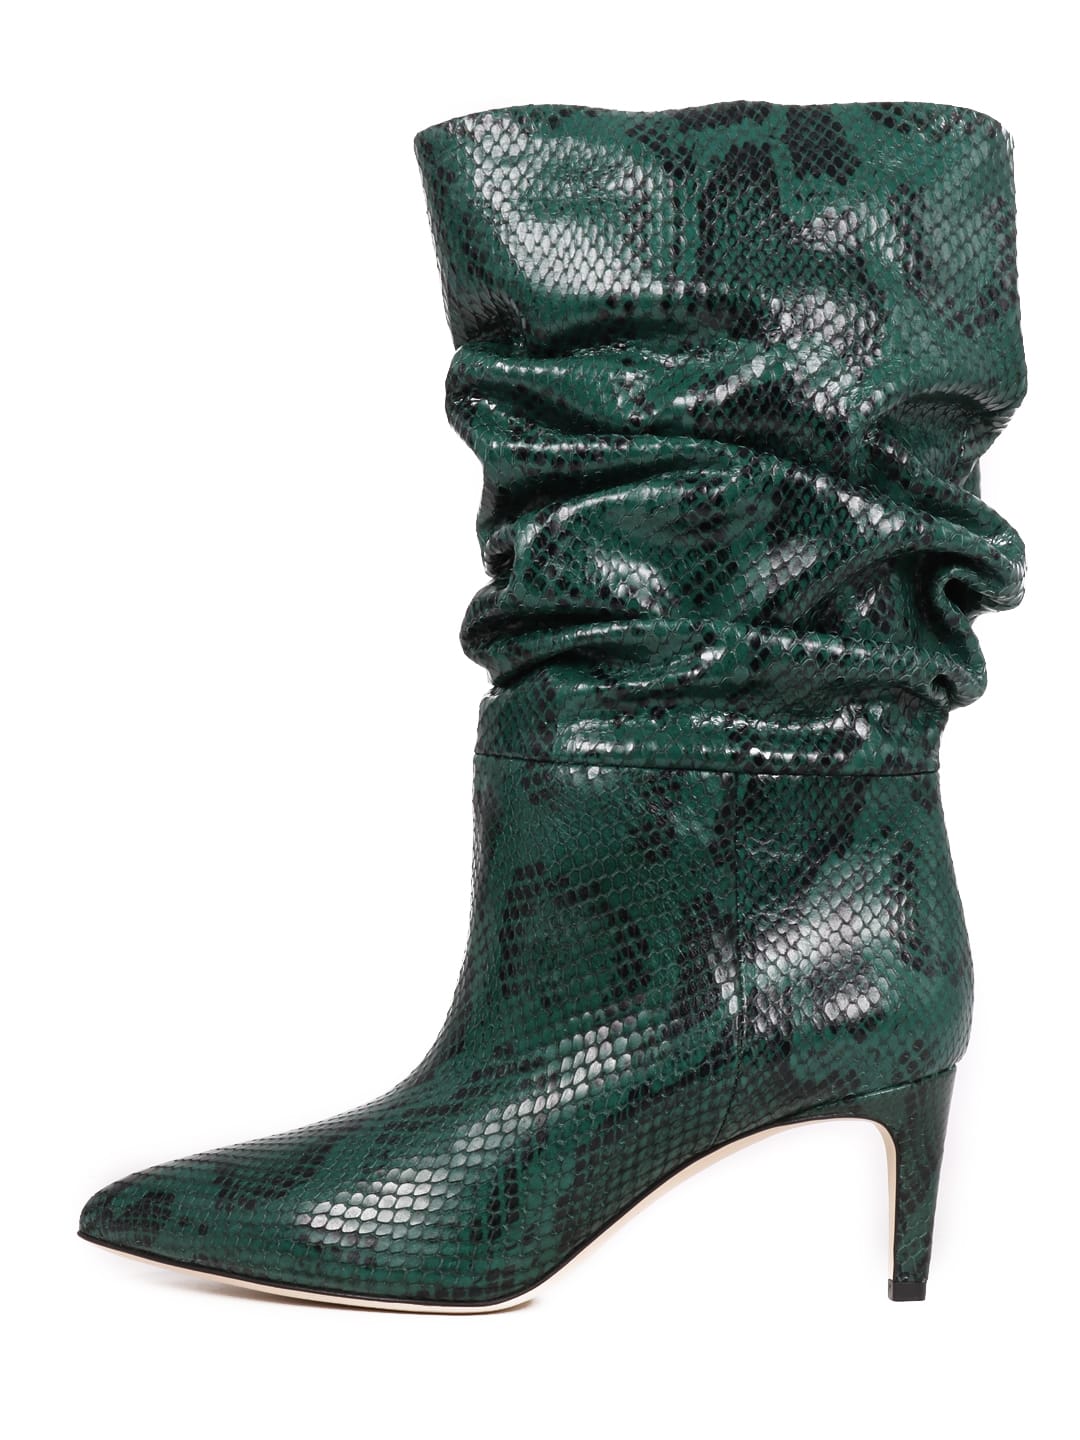 Paris Texas Snake Print Boots Green